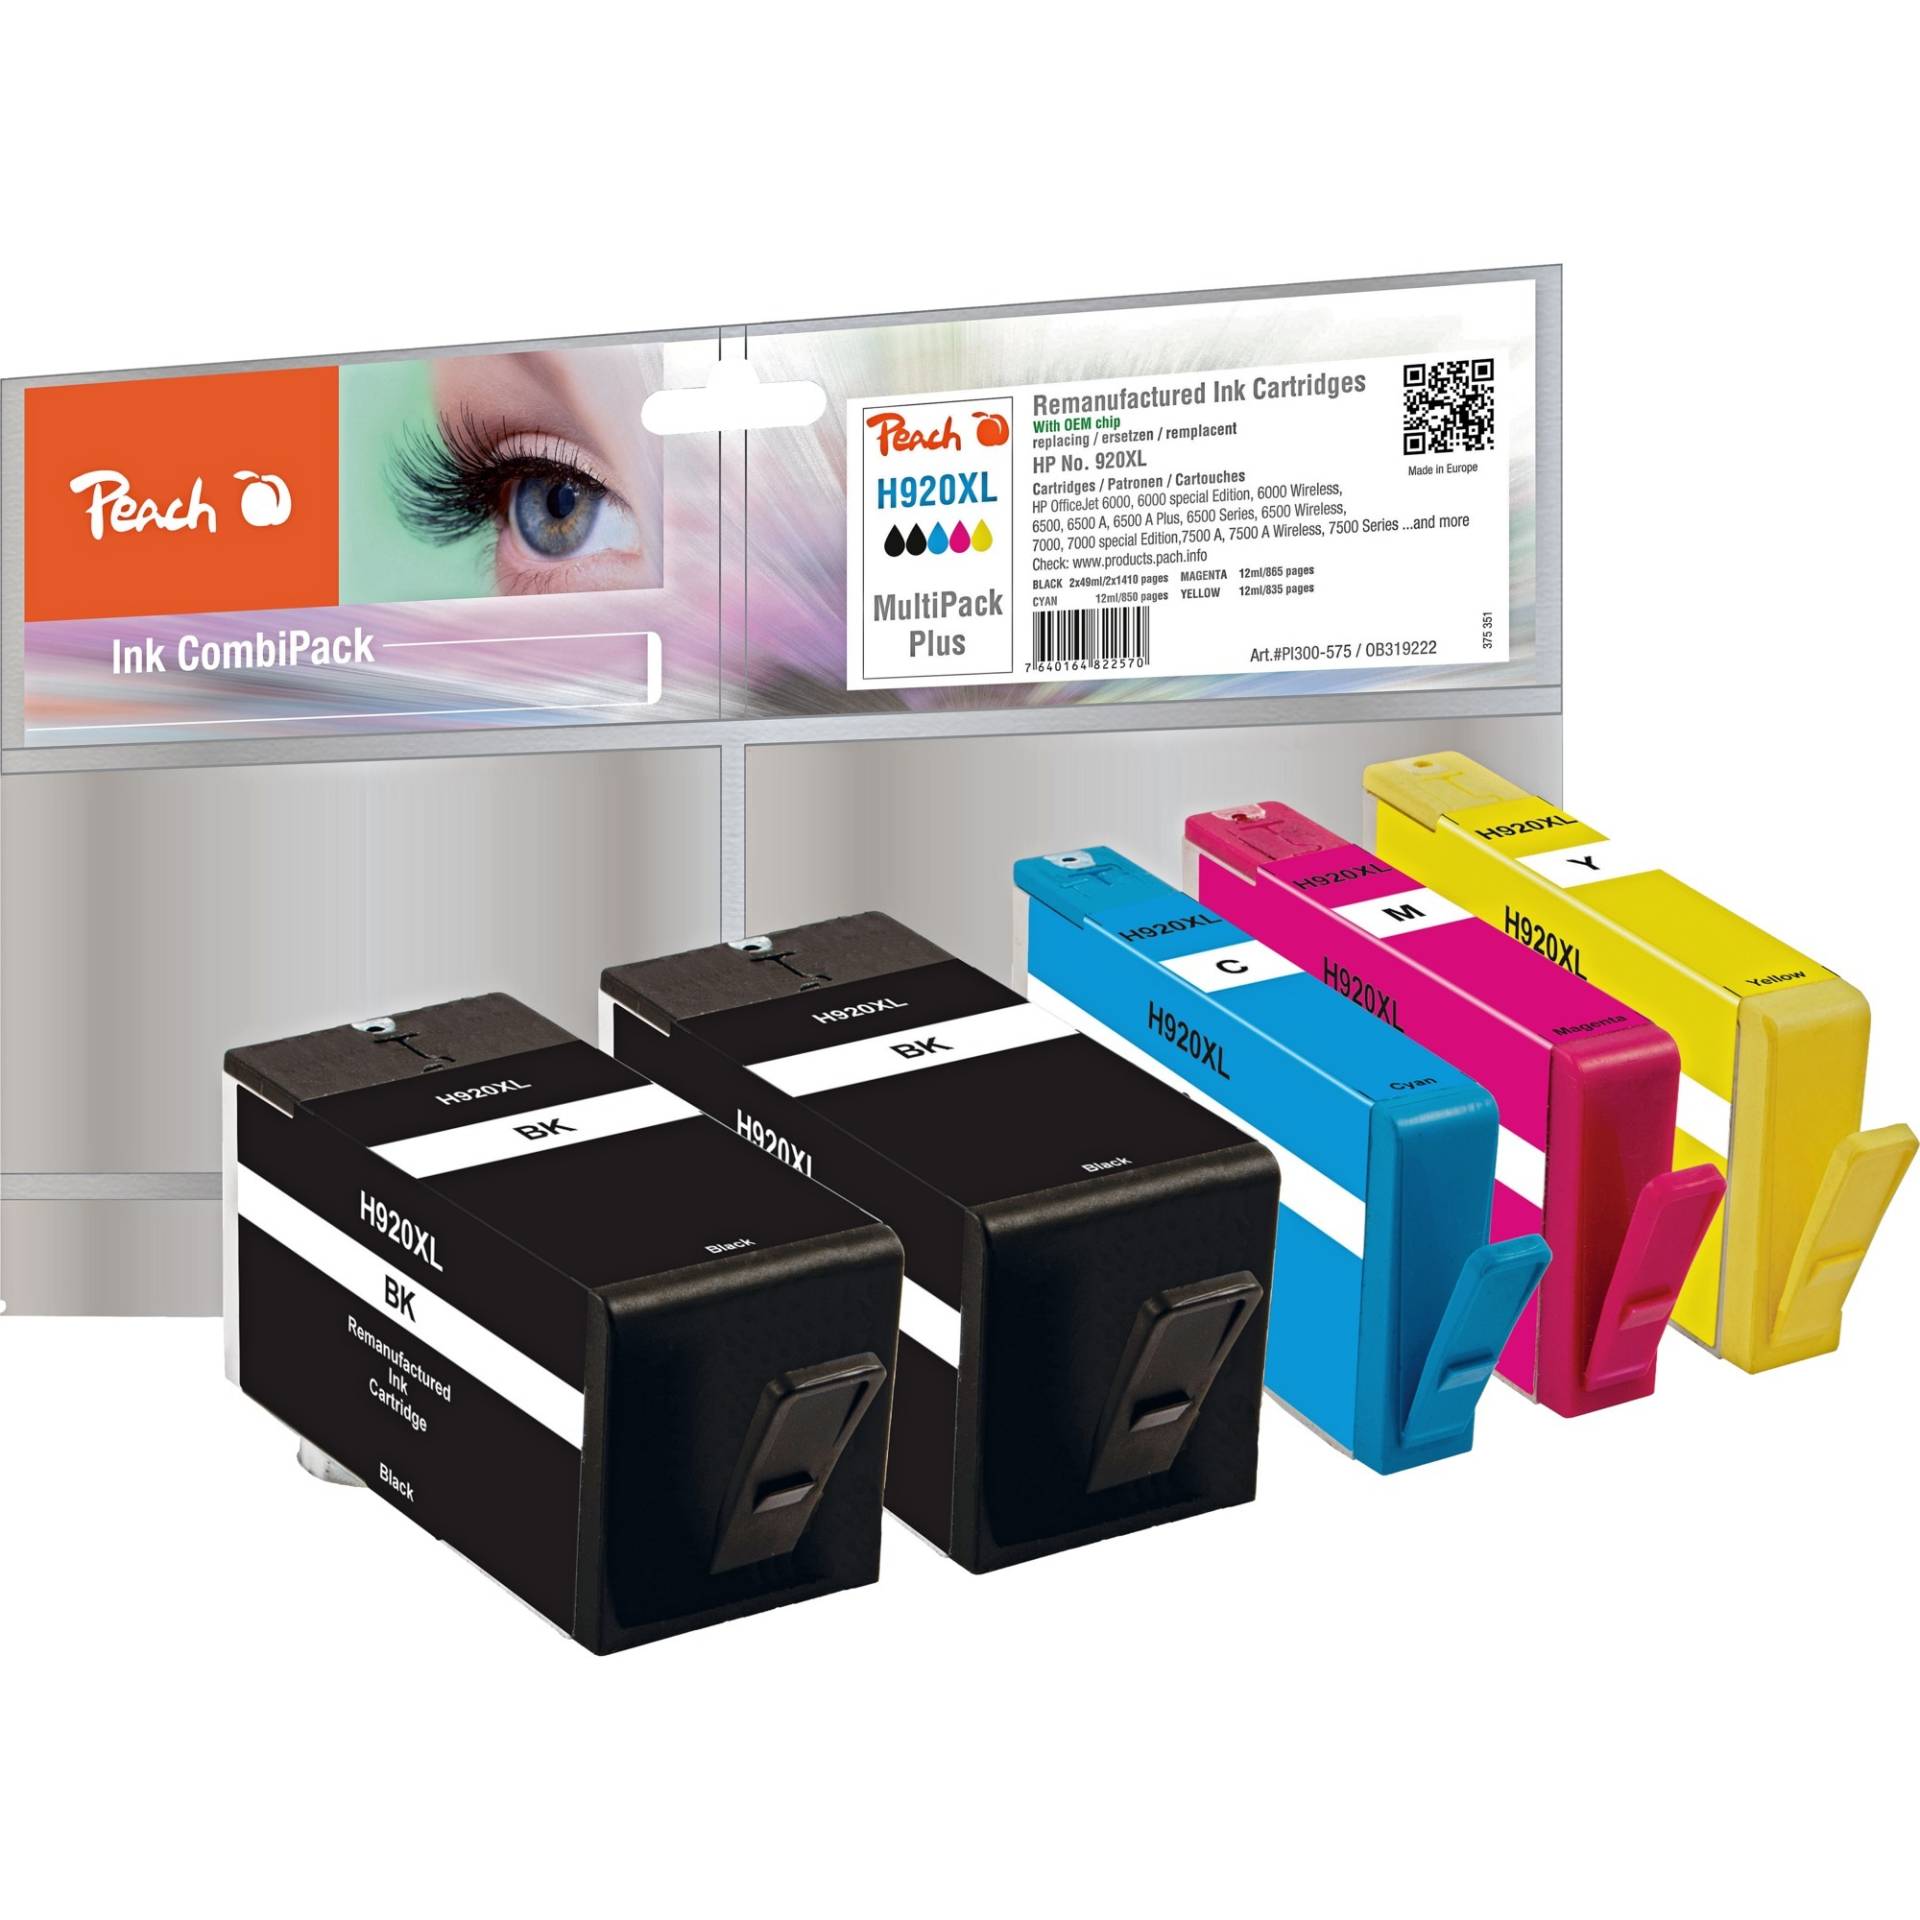 Tinte Spar Pack PI300-575 von Peach